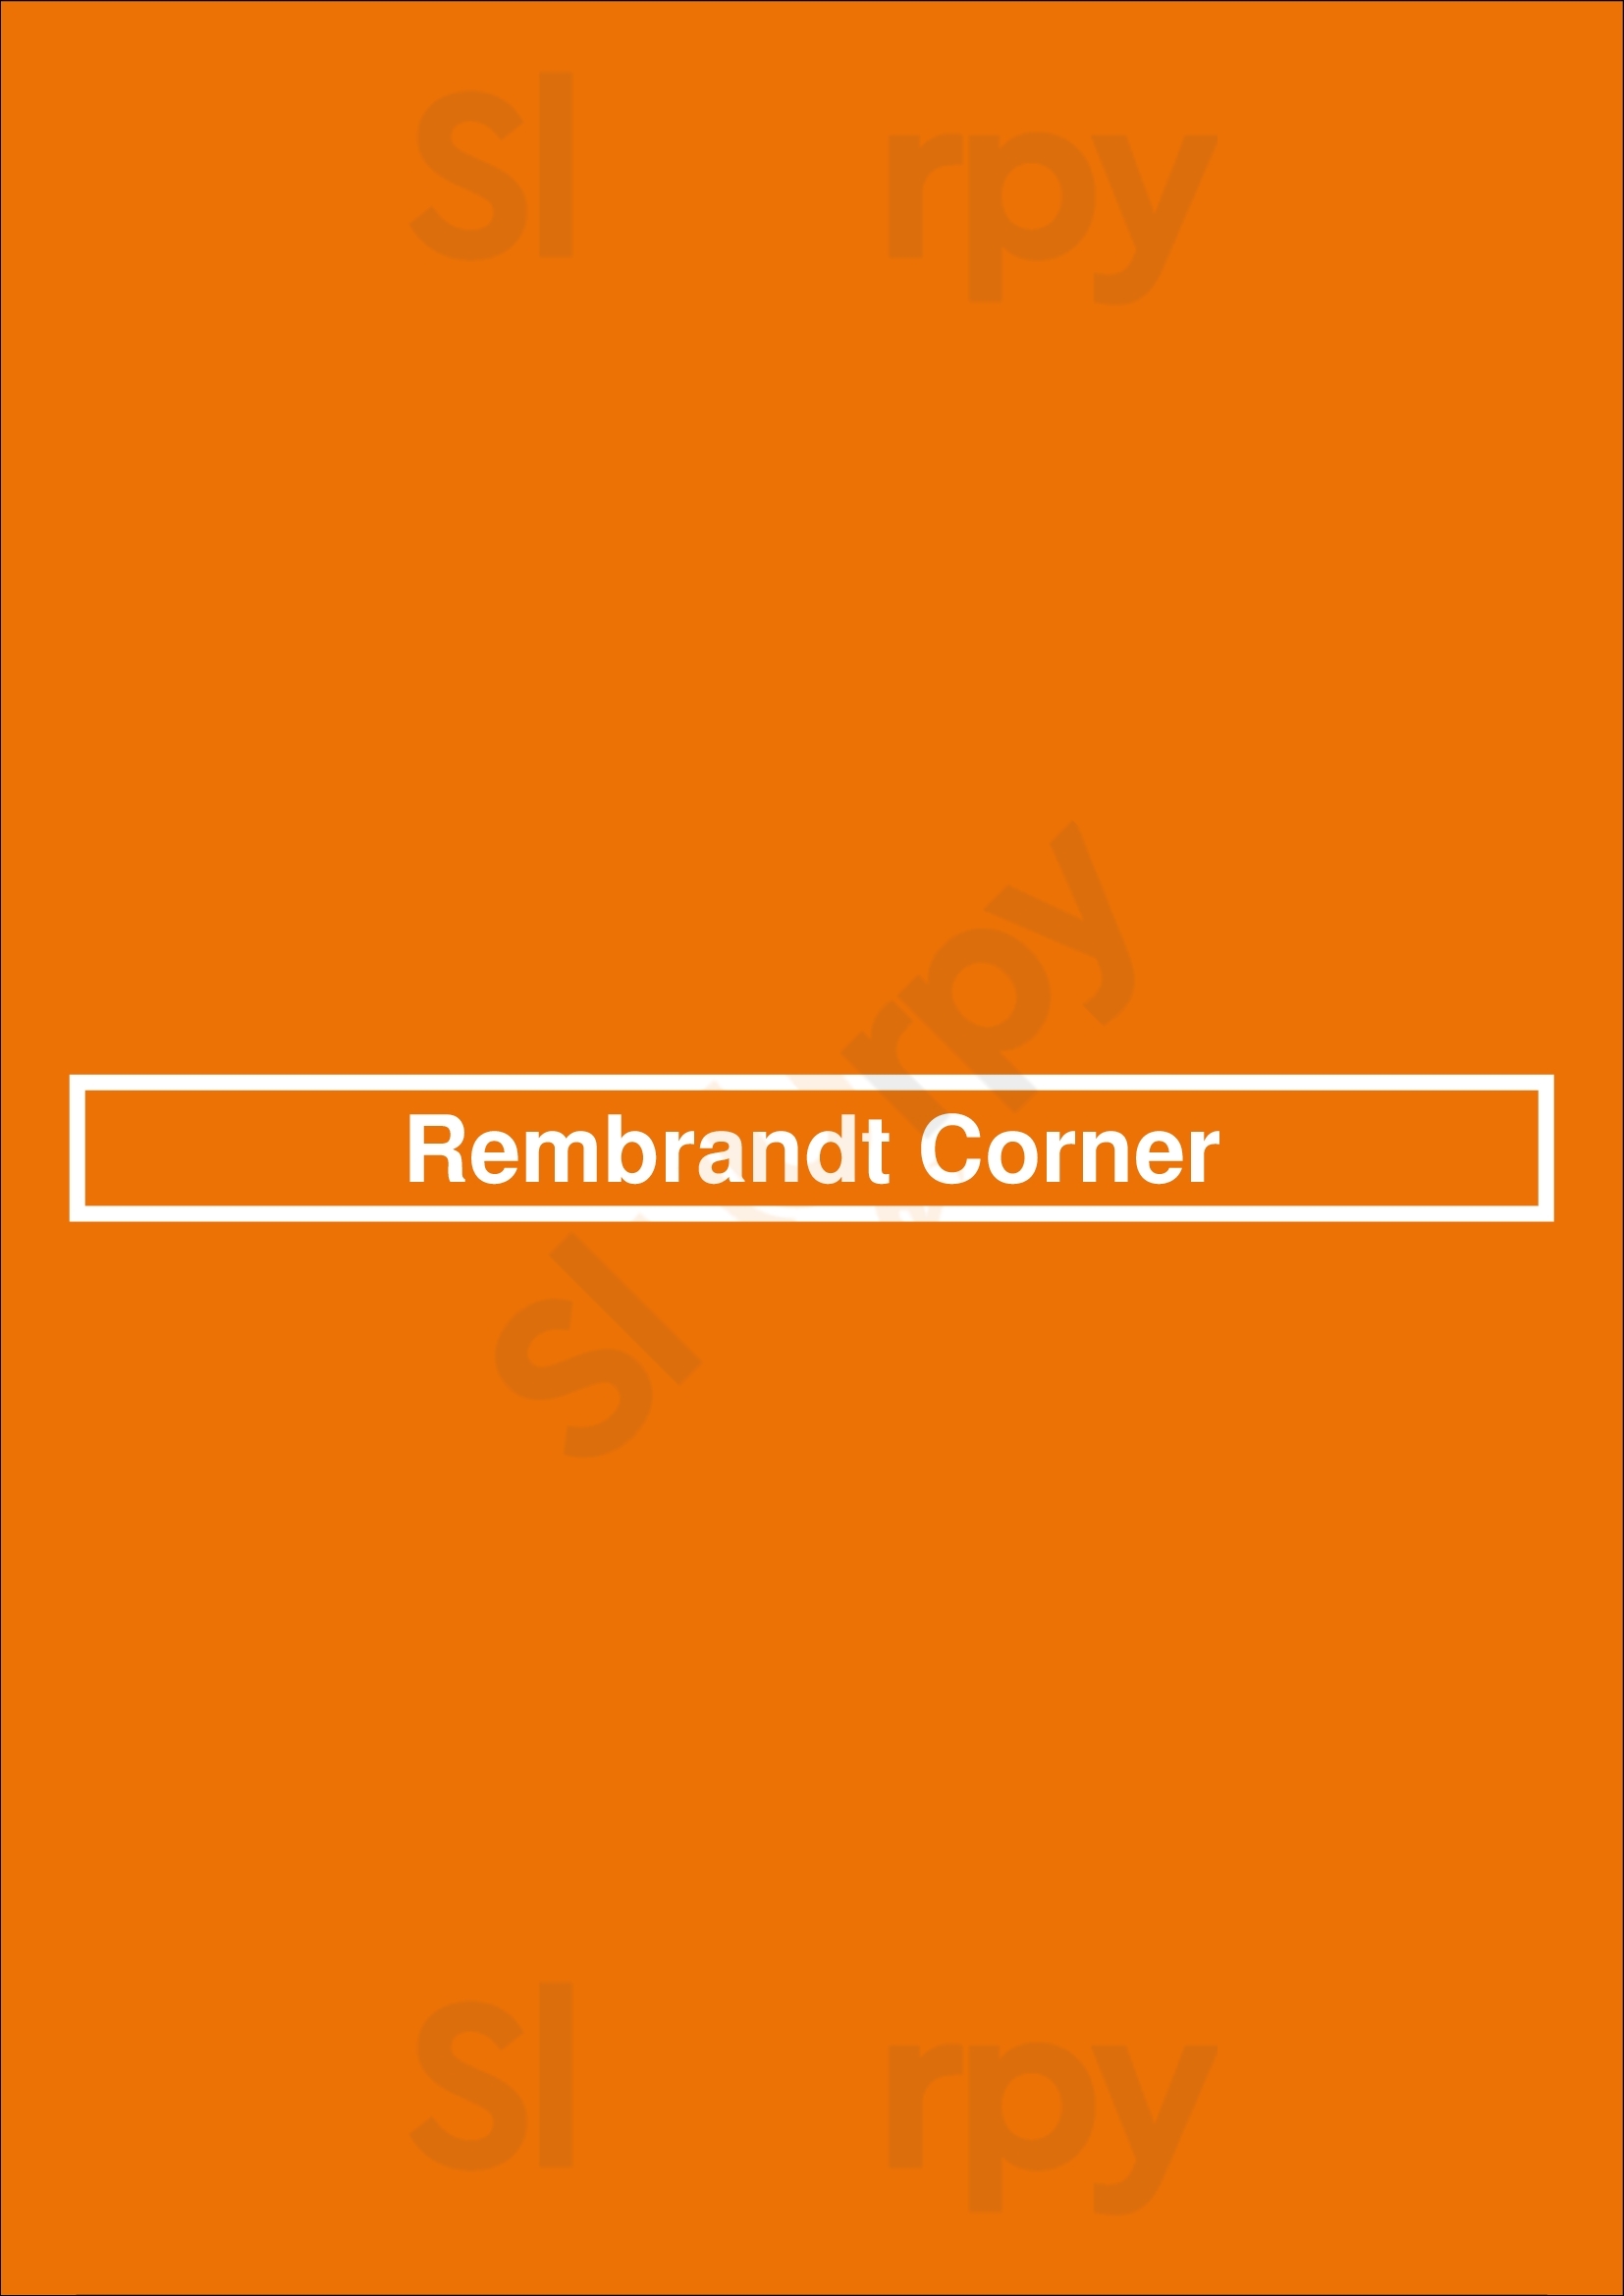 Rembrandt Corner Amsterdam Menu - 1